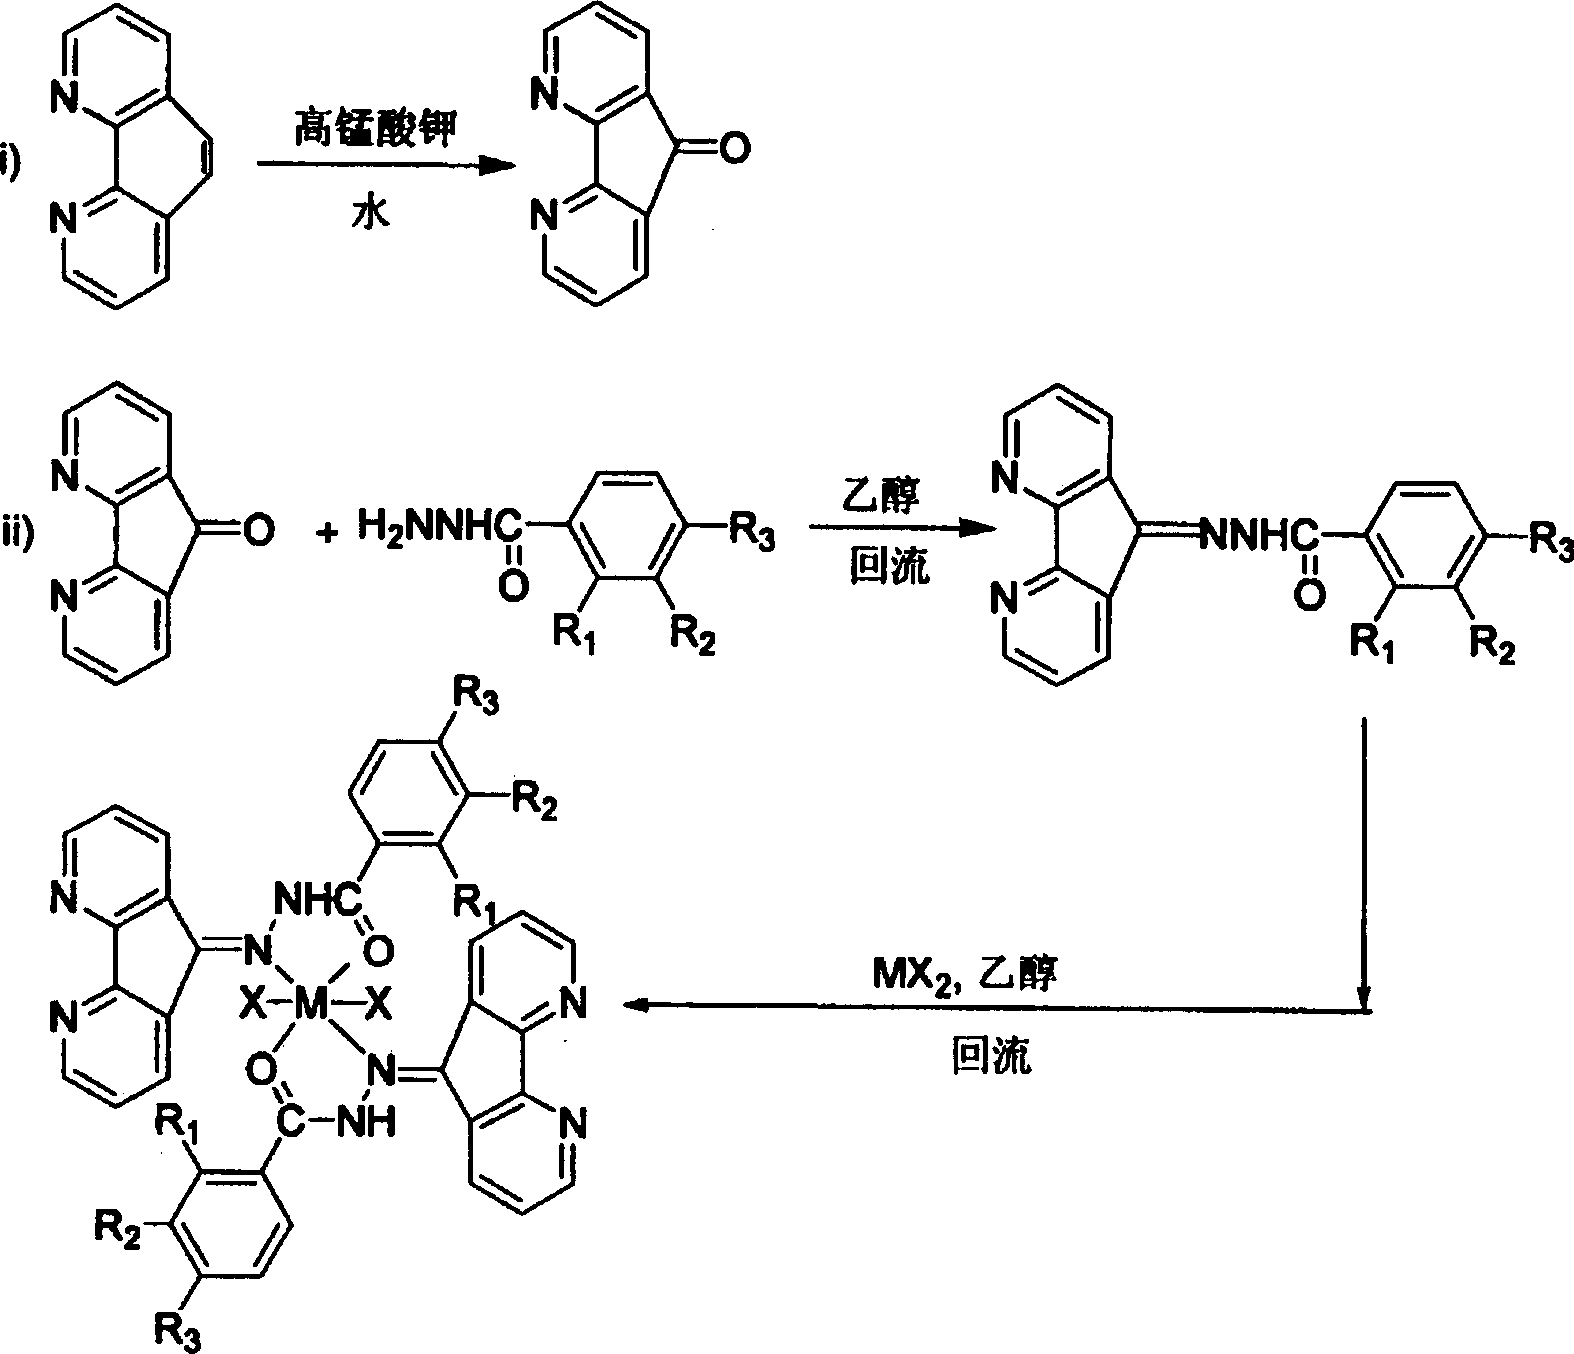 Post-transition metal catalyst system for oligomerization of ethylene